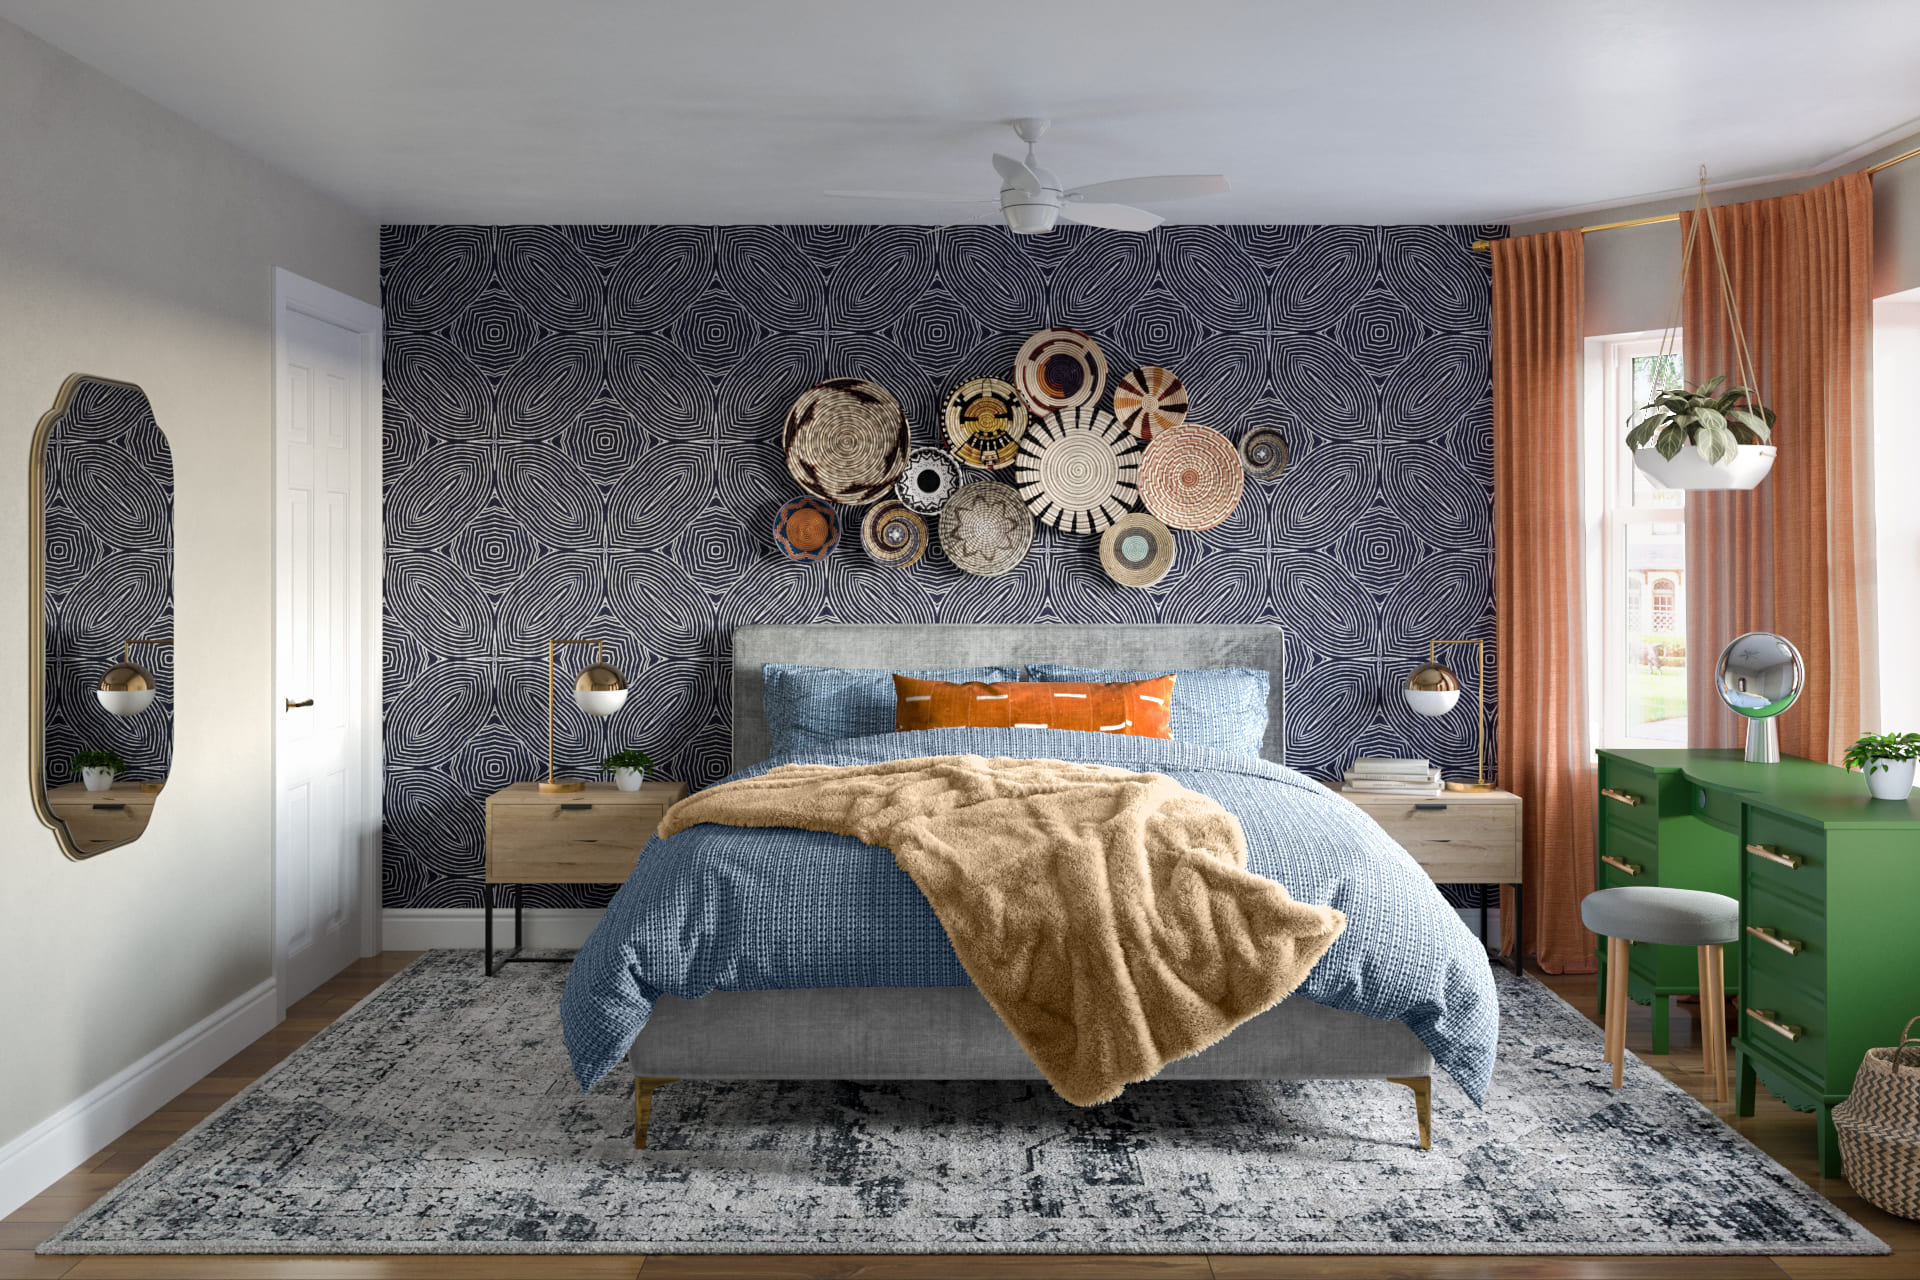 patterns in a bedroom design